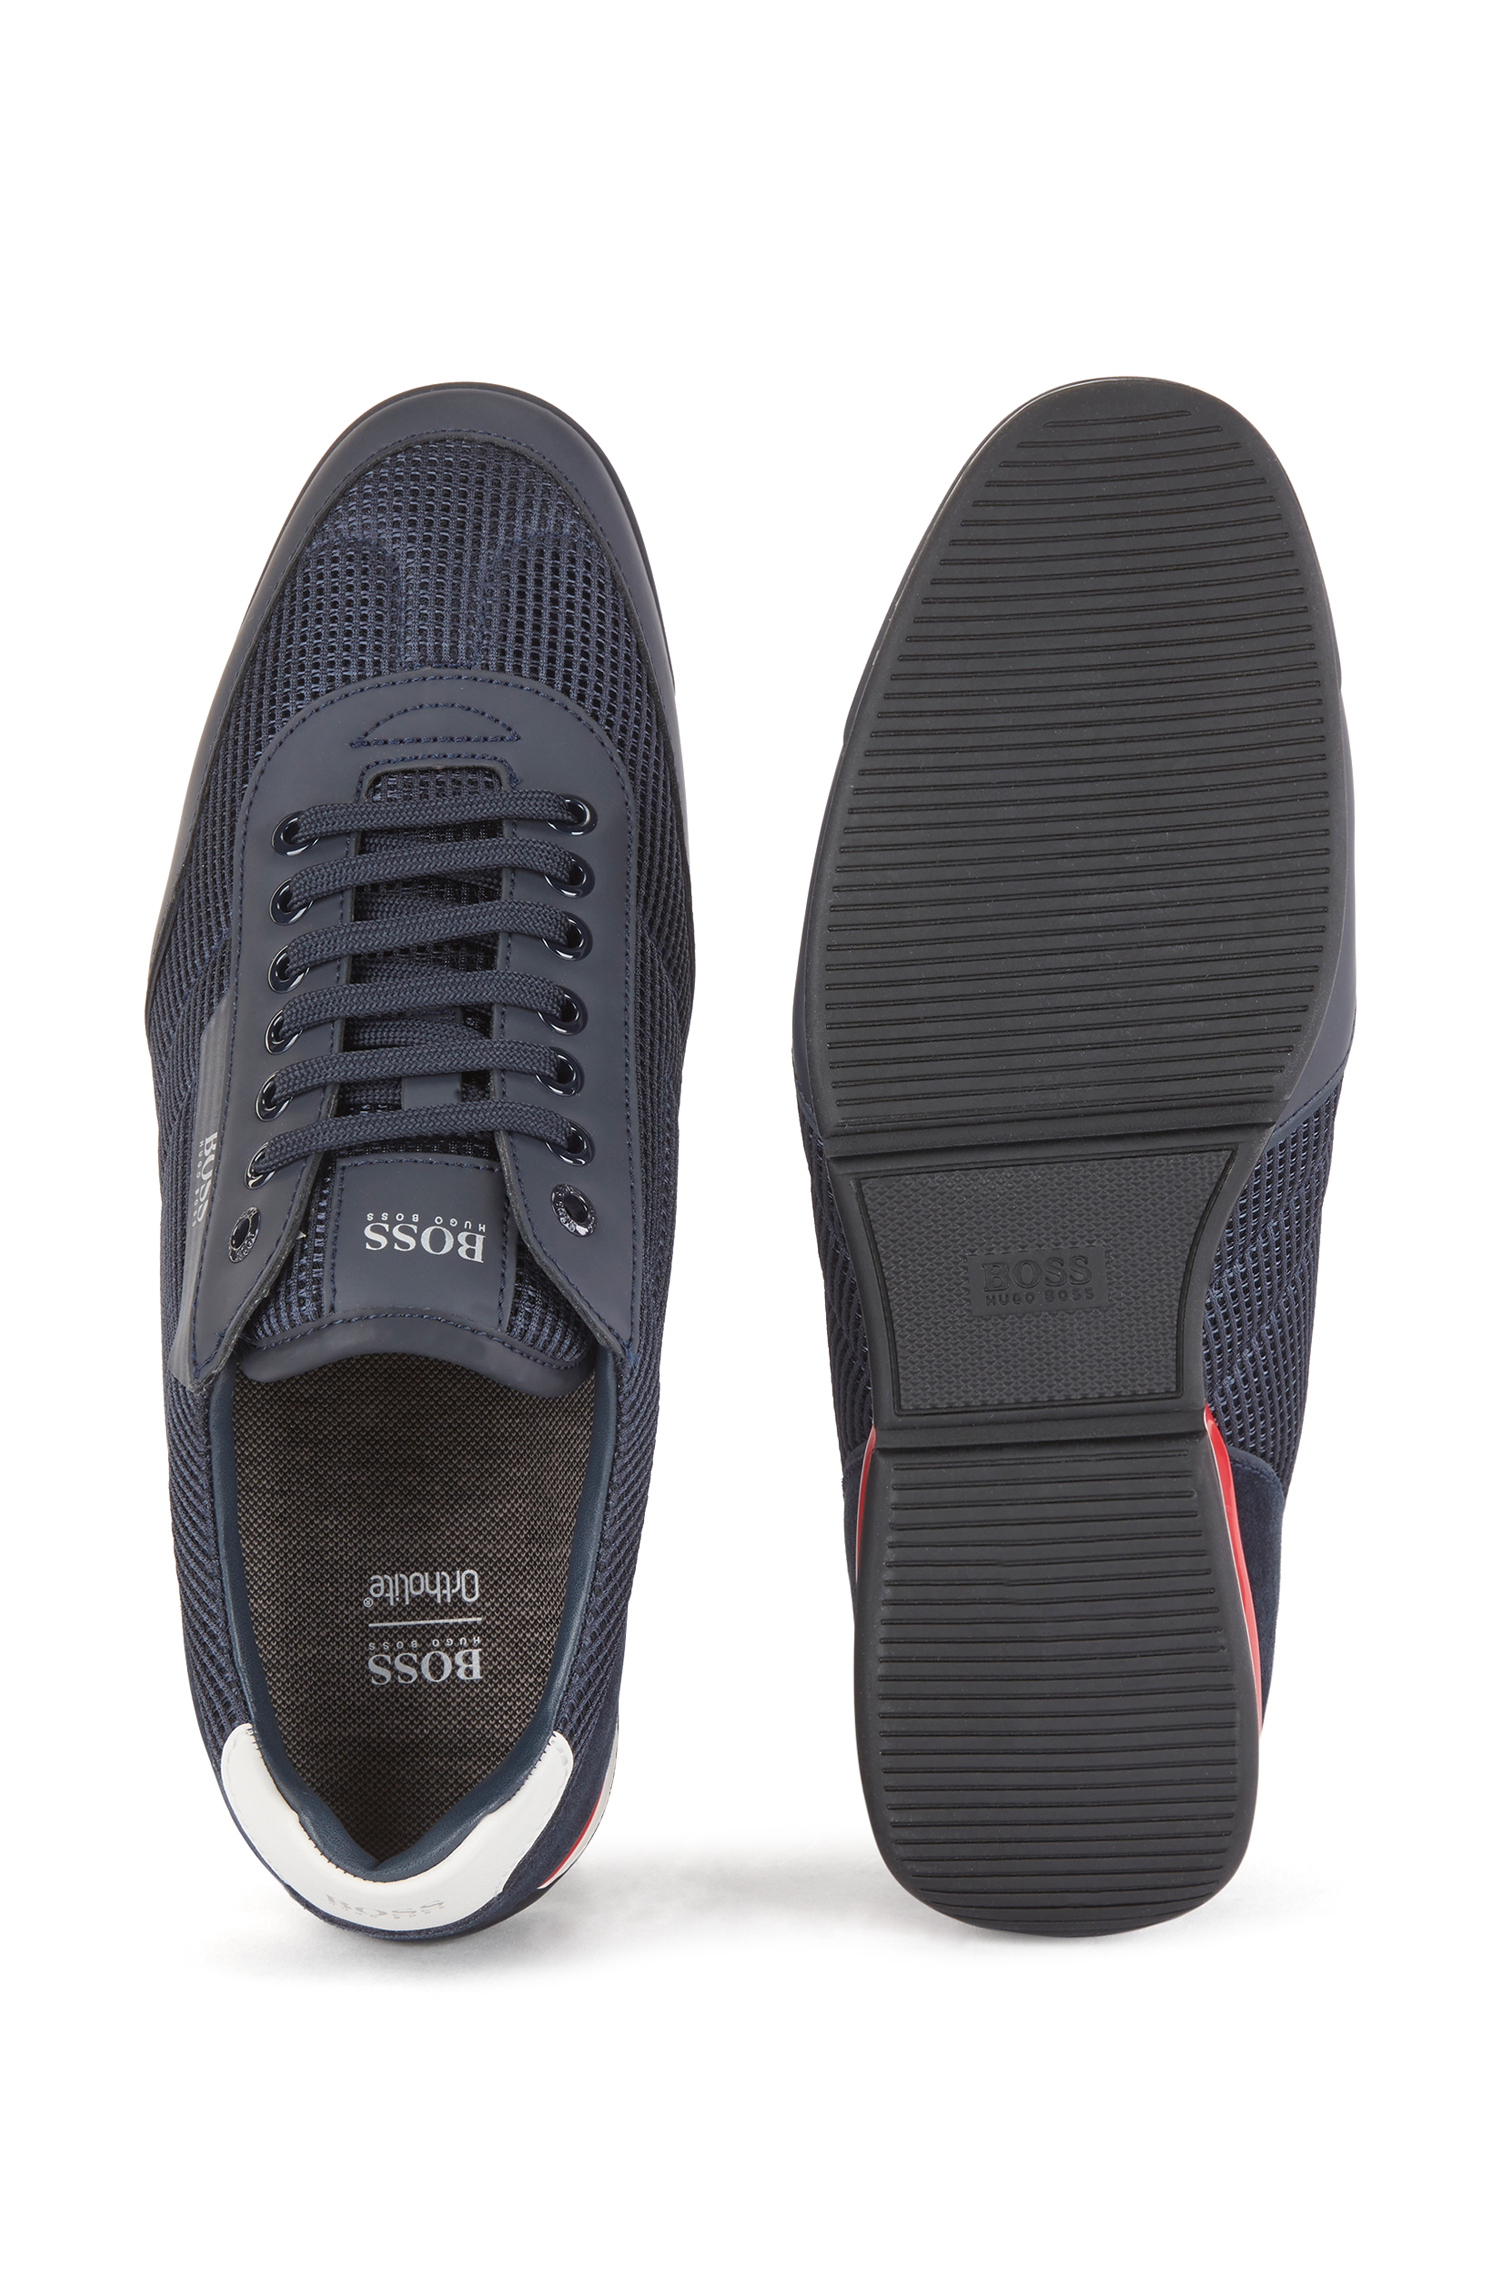 Hugo Boss Low-top sneakers, dark blue, 44